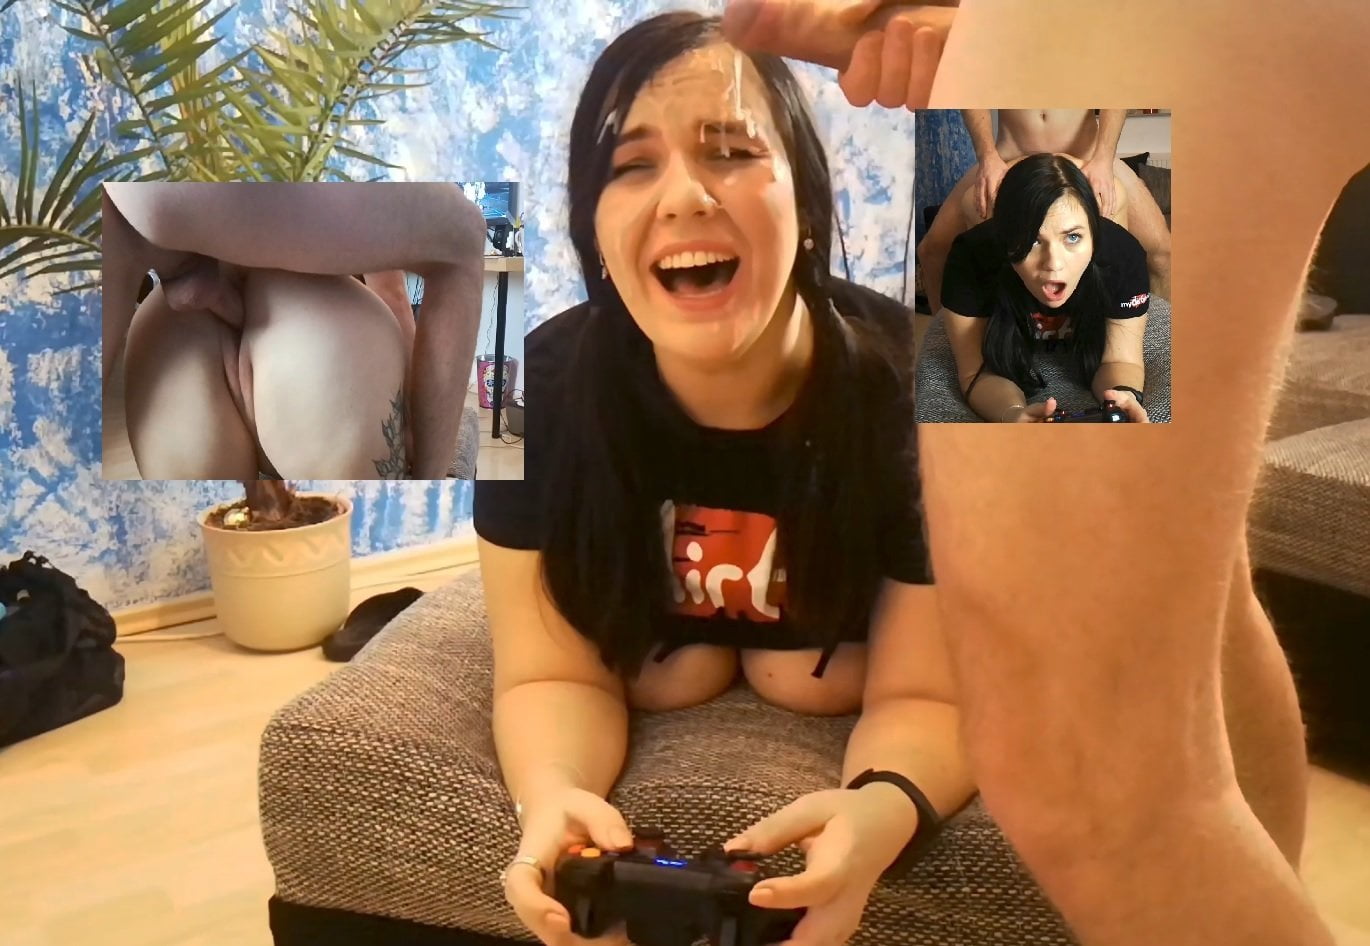 Gamer Girl Fucked While Gaming